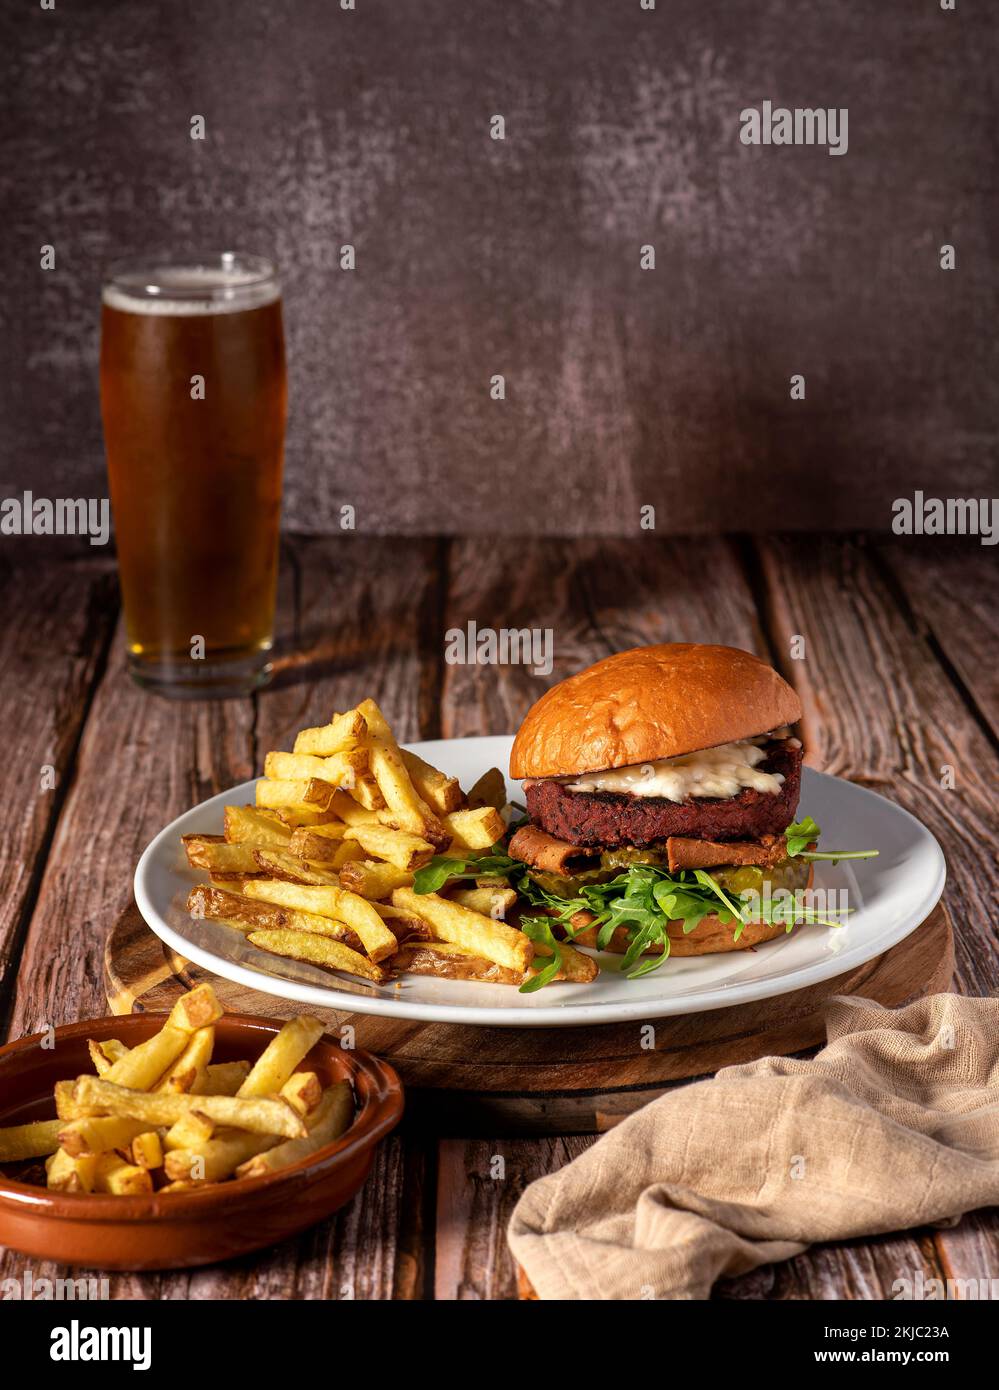 Fotografia del cibo di hamburger vegani, hamburger, patatine fritte, birra Foto Stock